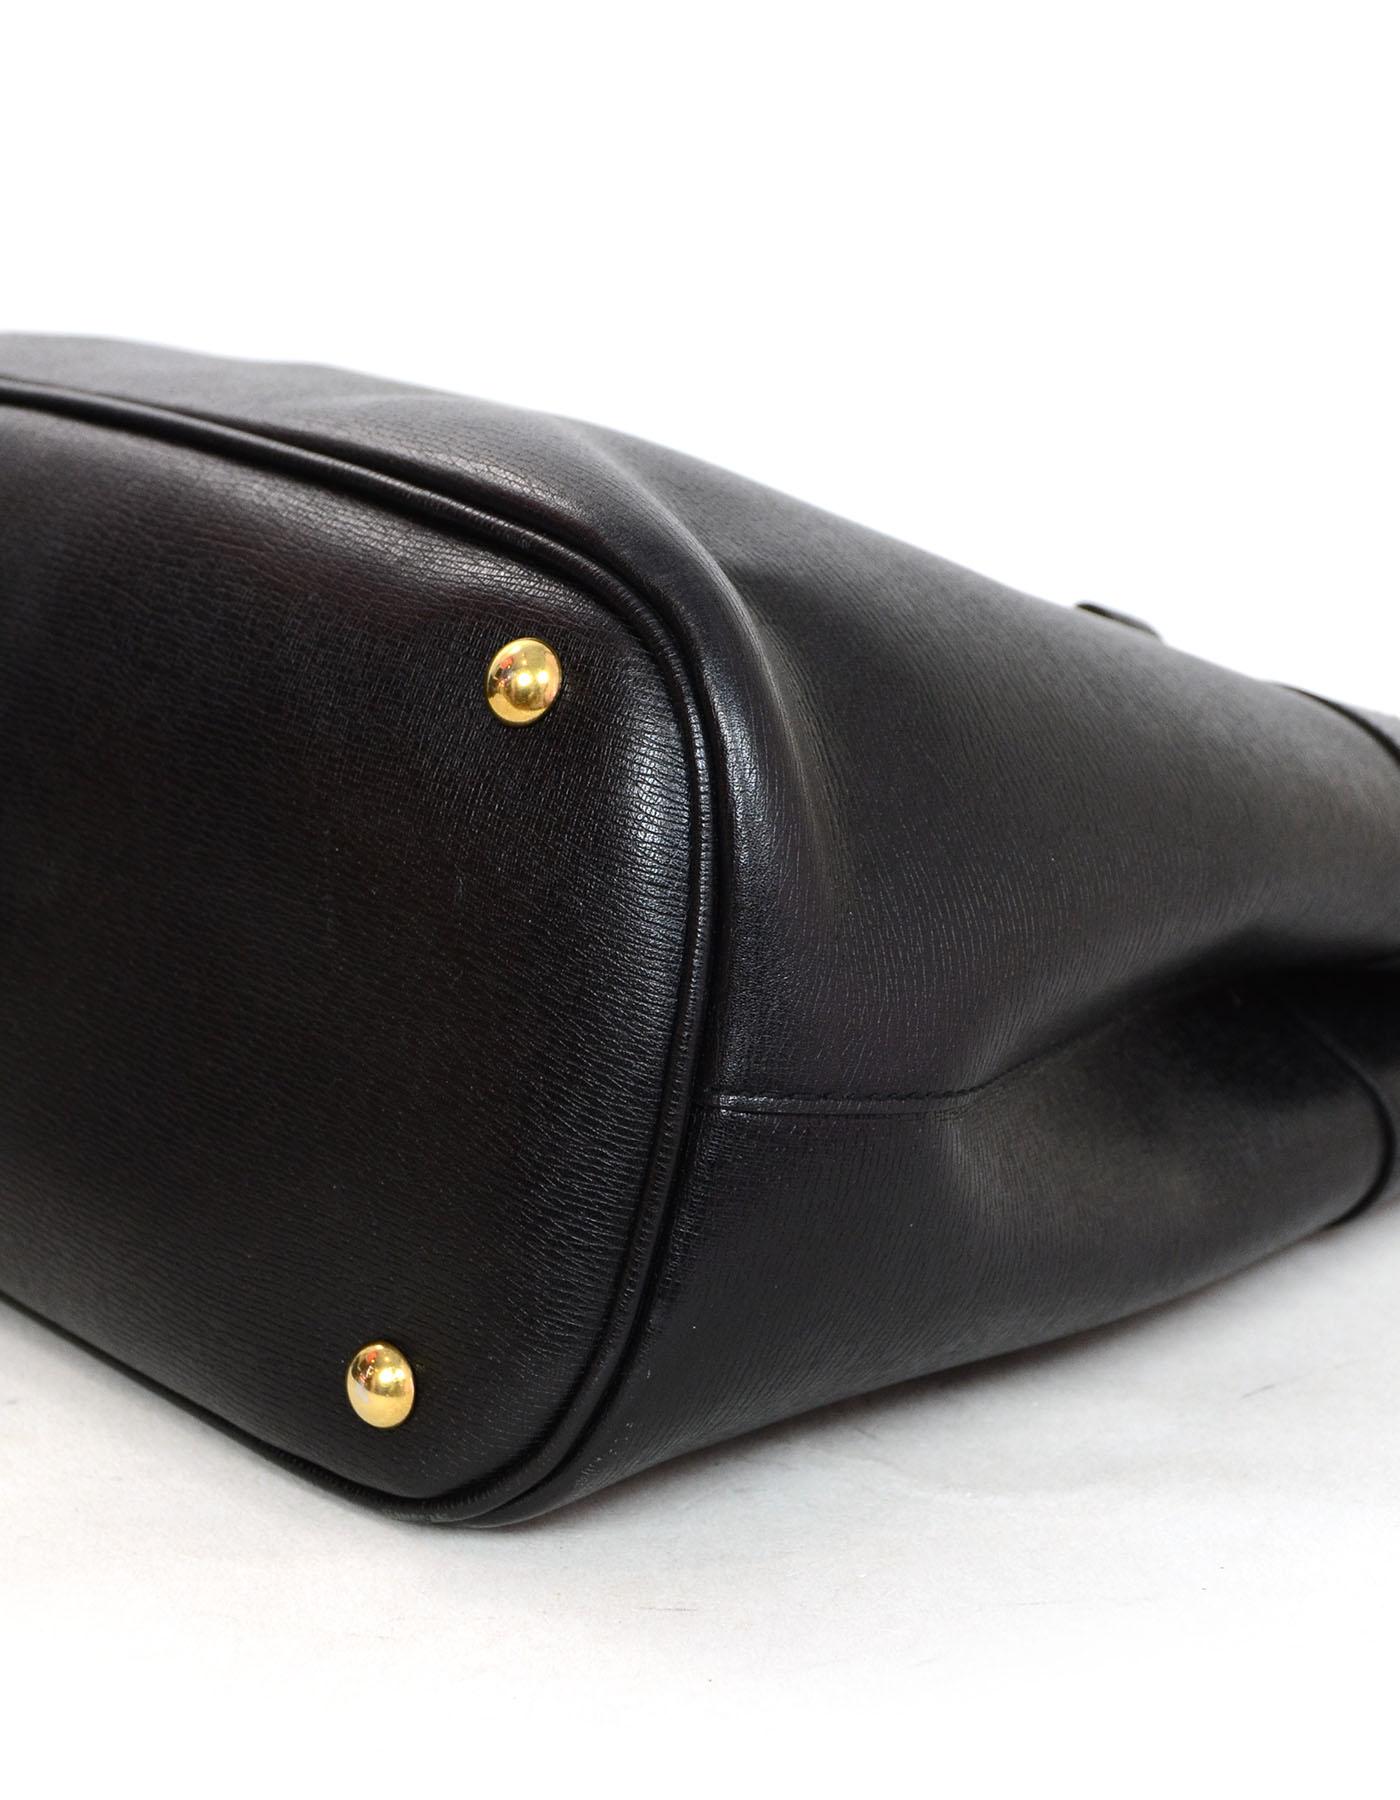 Gucci Black Medium Bright Bit Leather Satchel Bag with Dust Bag  1